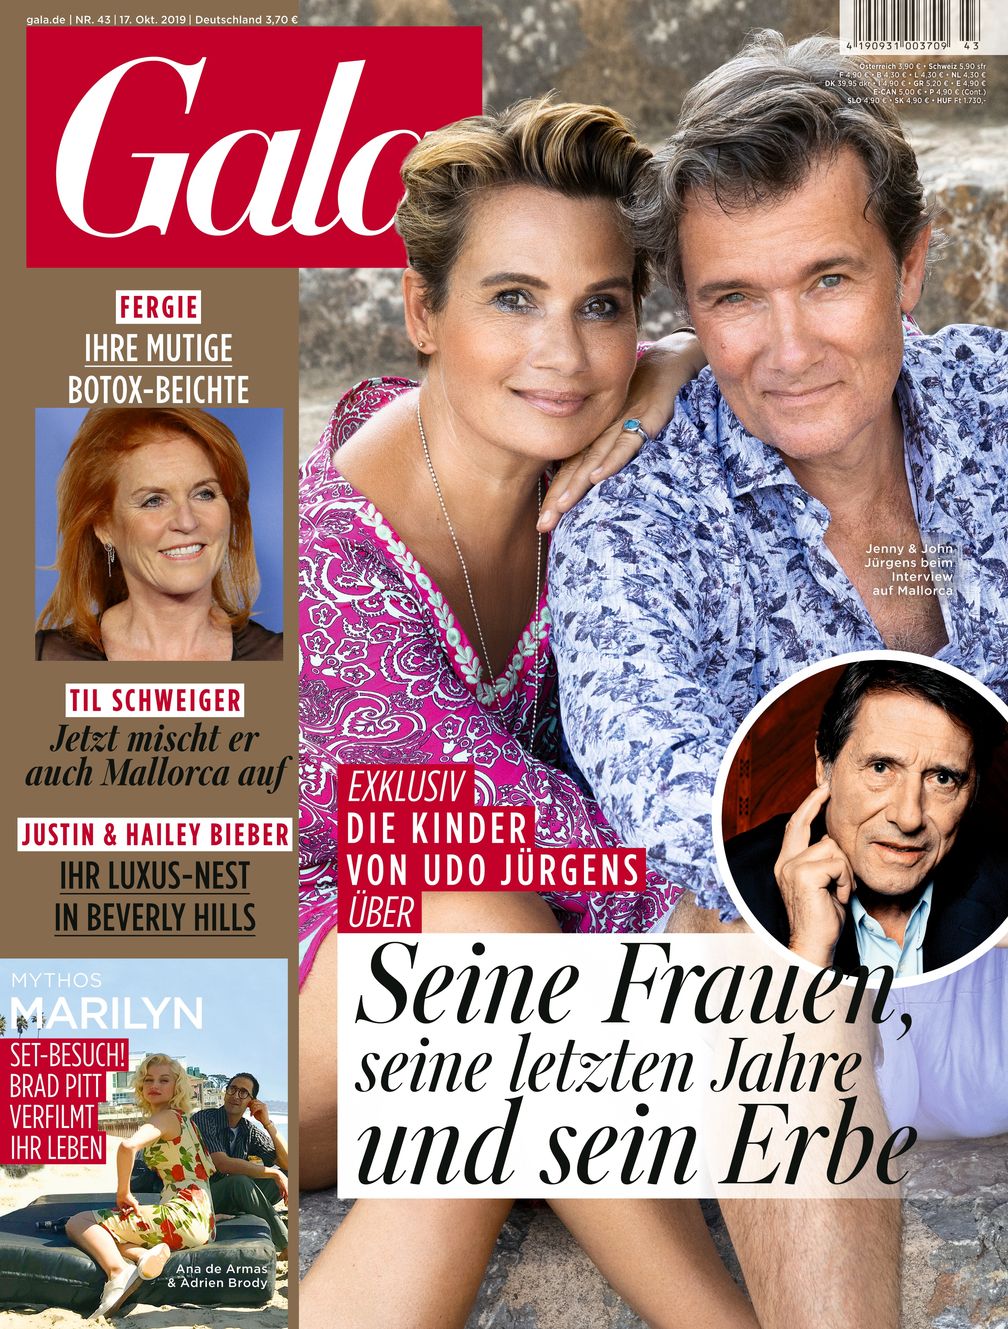 GALA Cover 43/2019 (EVT: 17.10.2019) Bild: "obs/Gruner+Jahr, Gala"